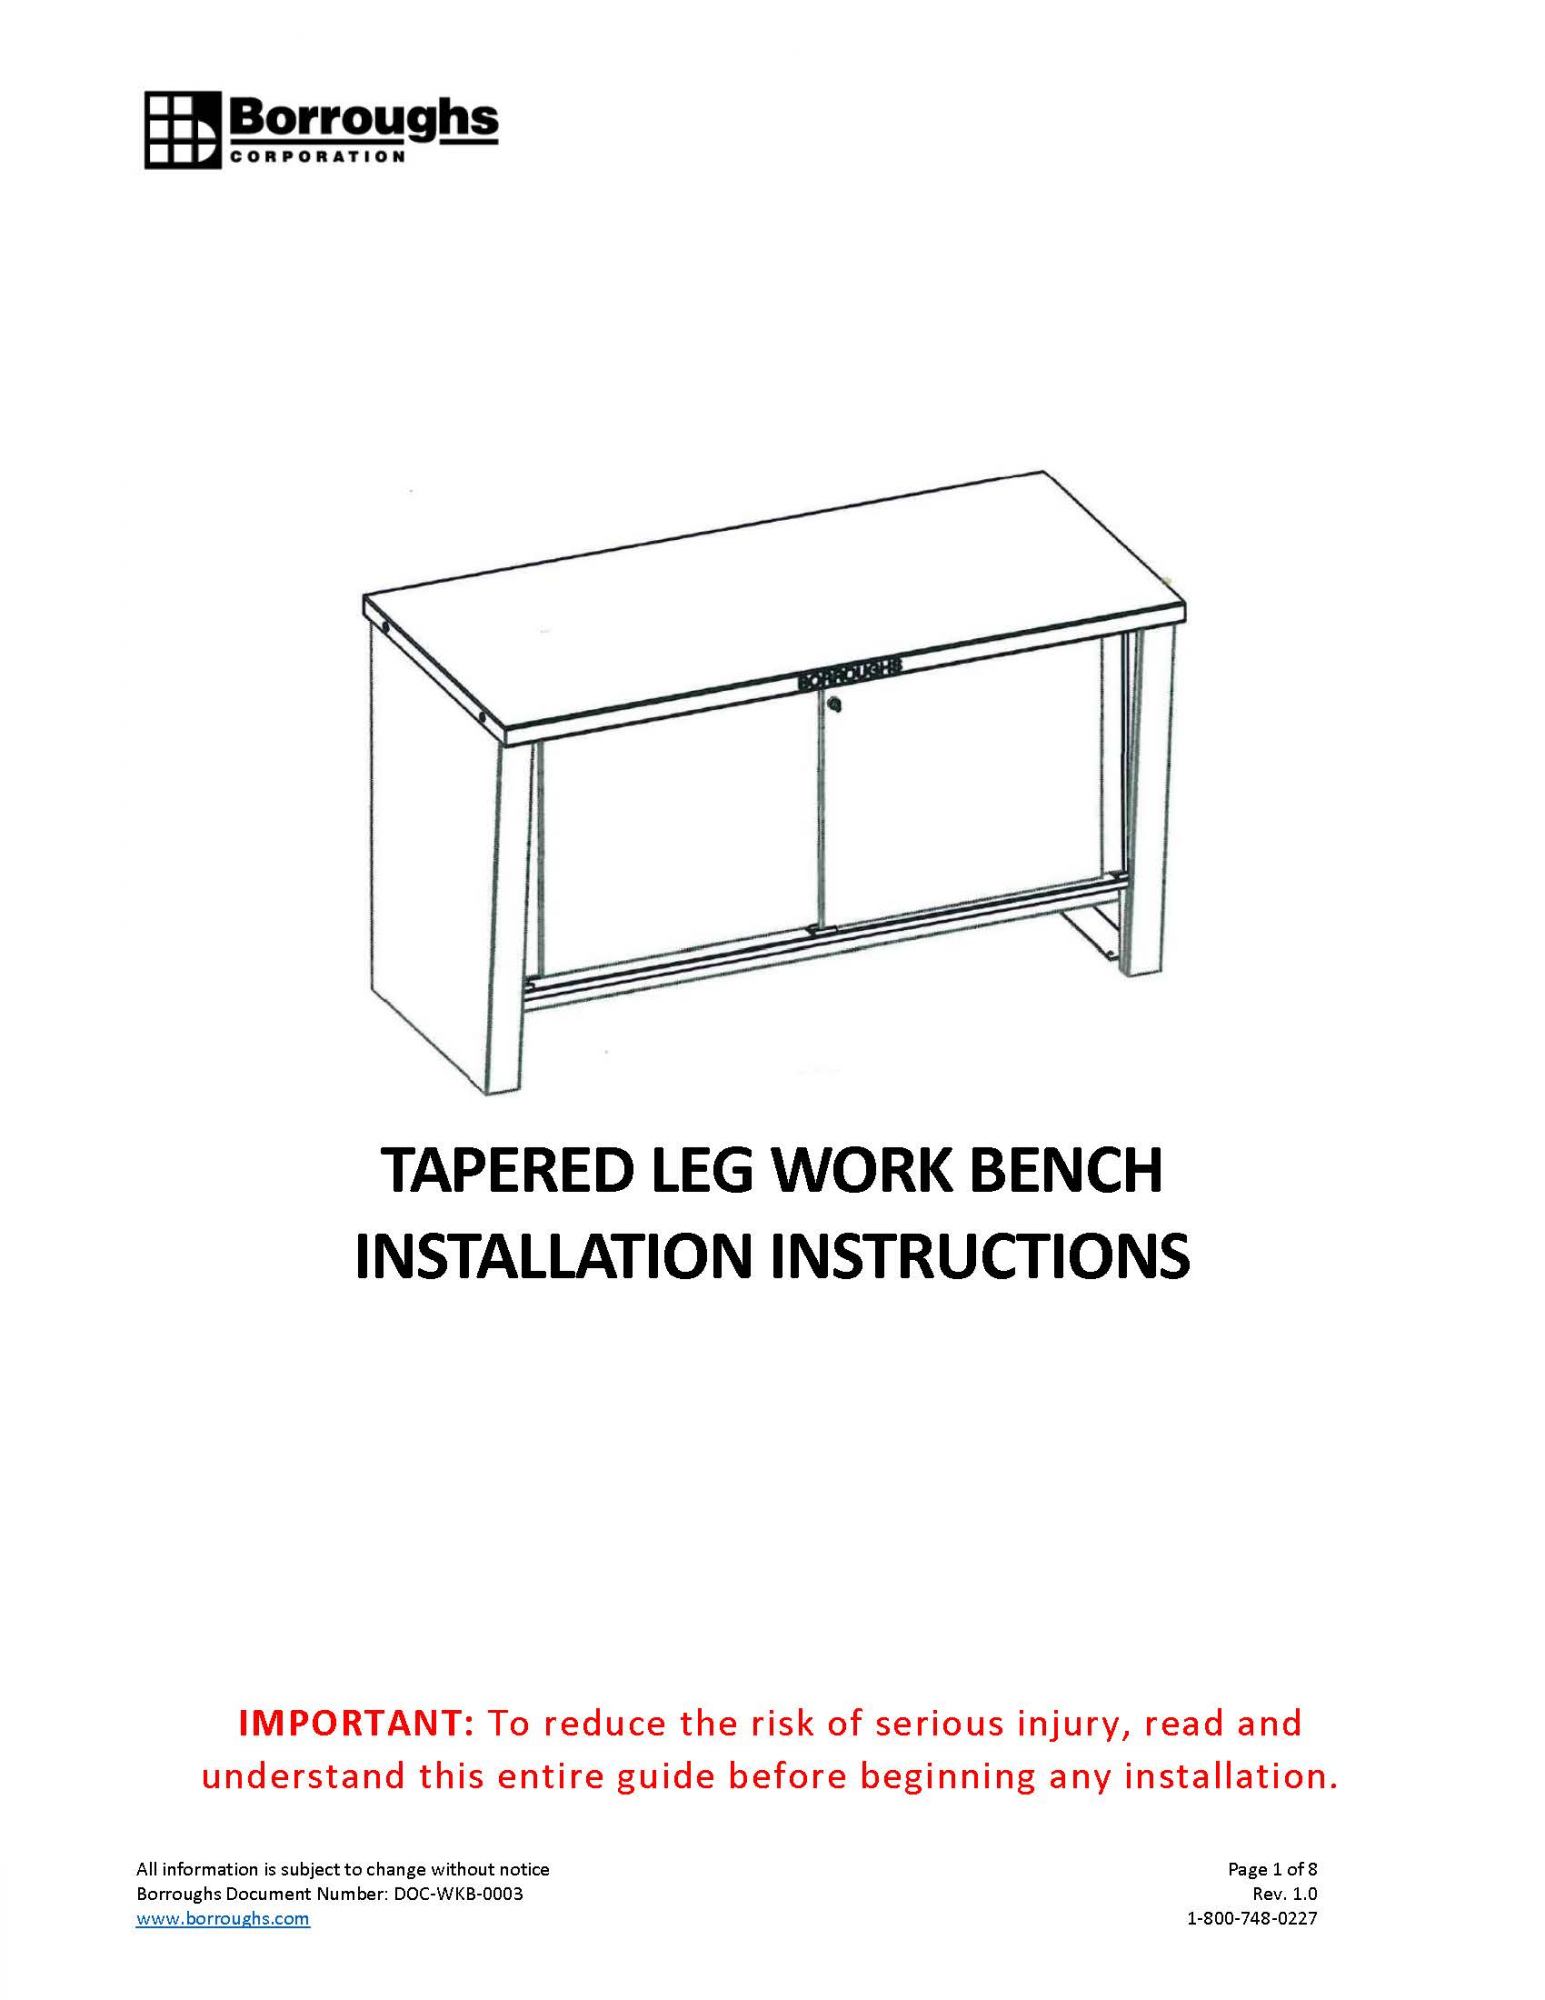 Tapered Leg Workbench